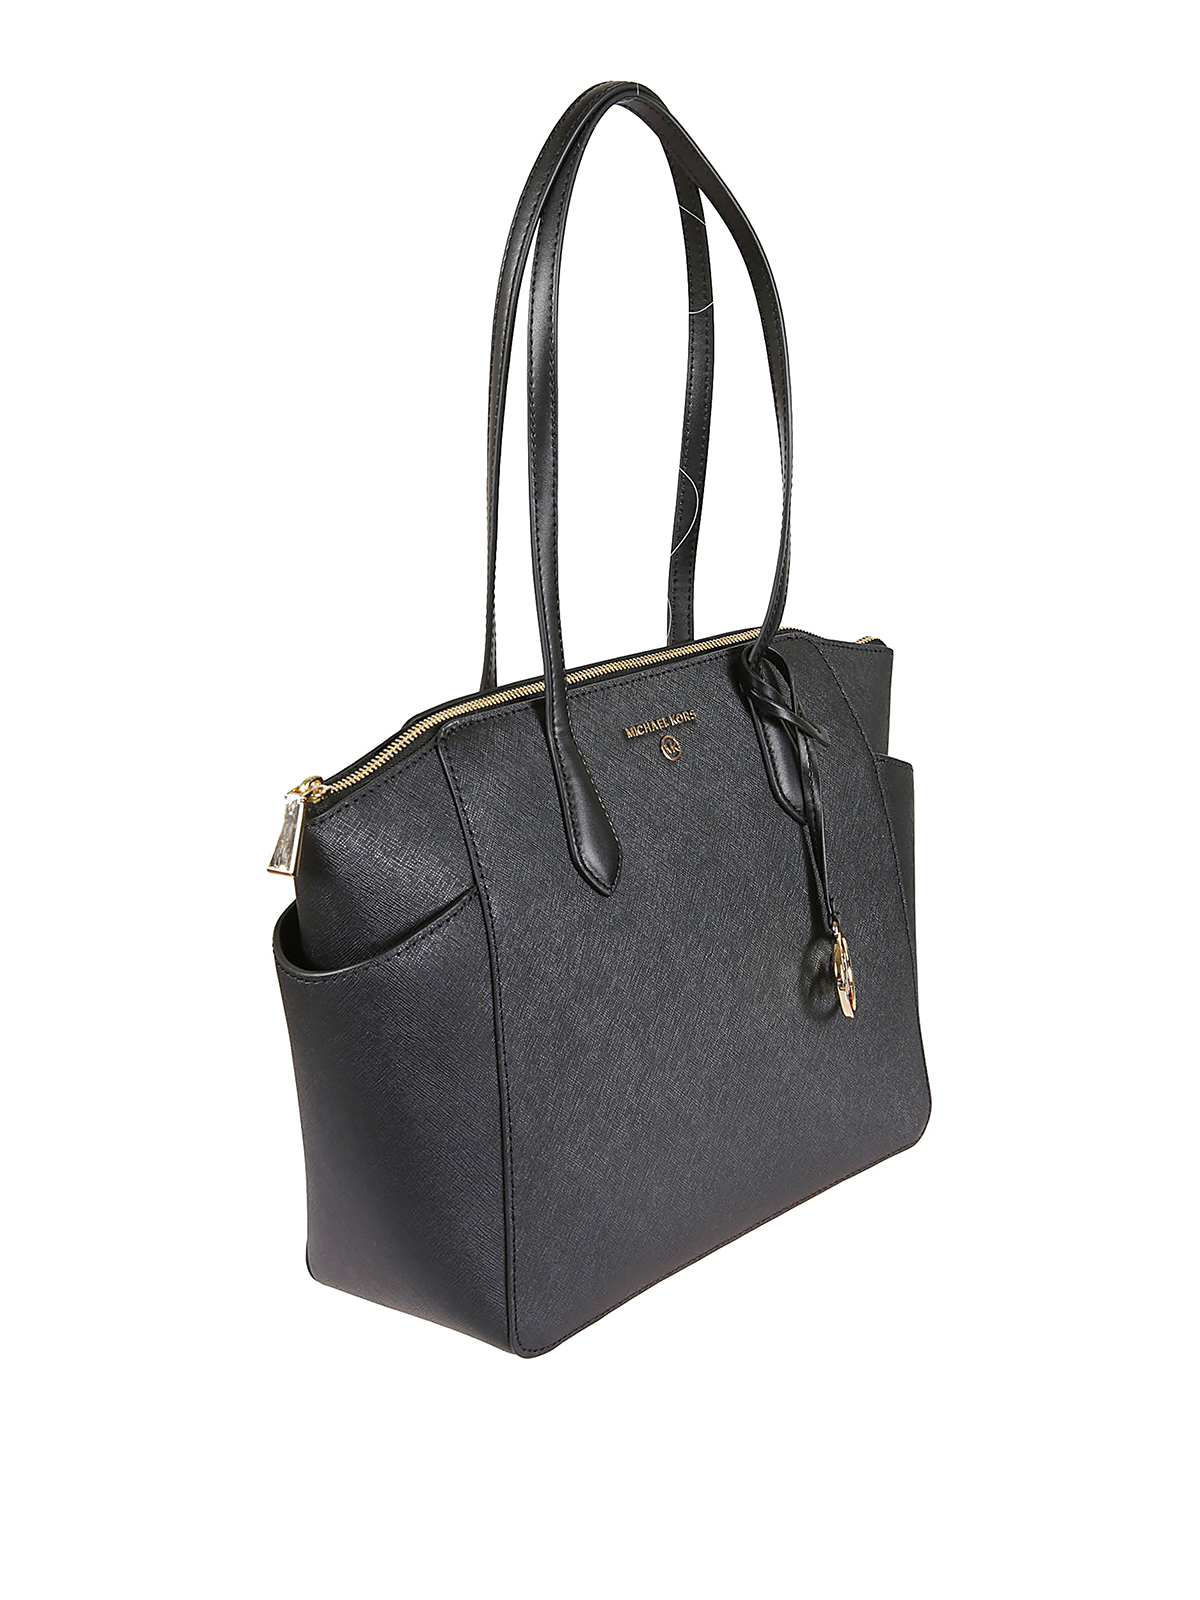 MICHAEL KORS: Marilyn Michael bag in Saffiano leather - Black